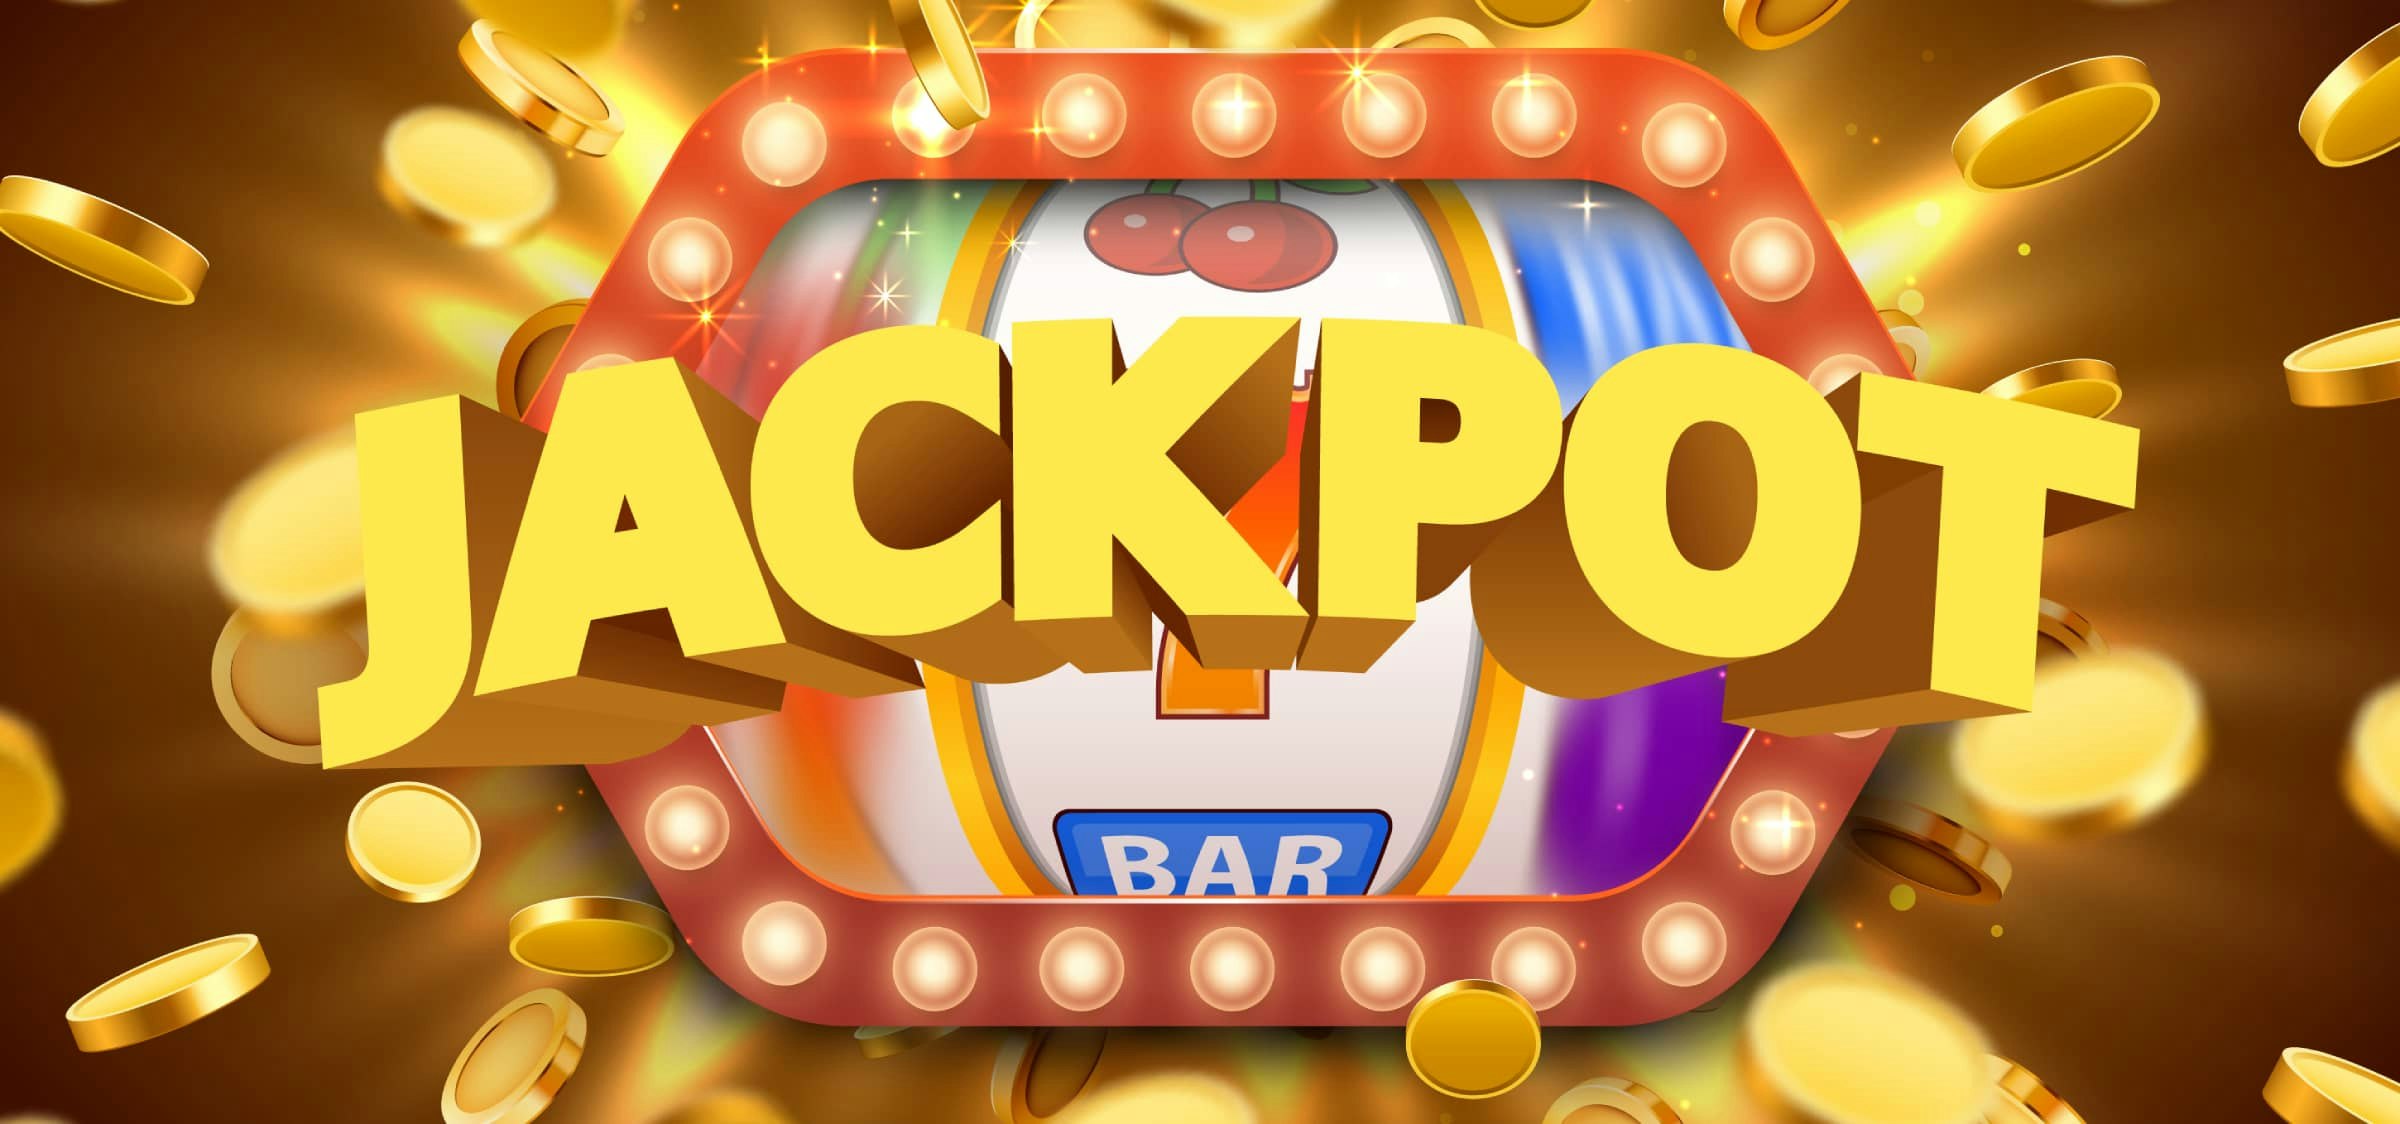 Progressive Jackpot slot tips to help you win